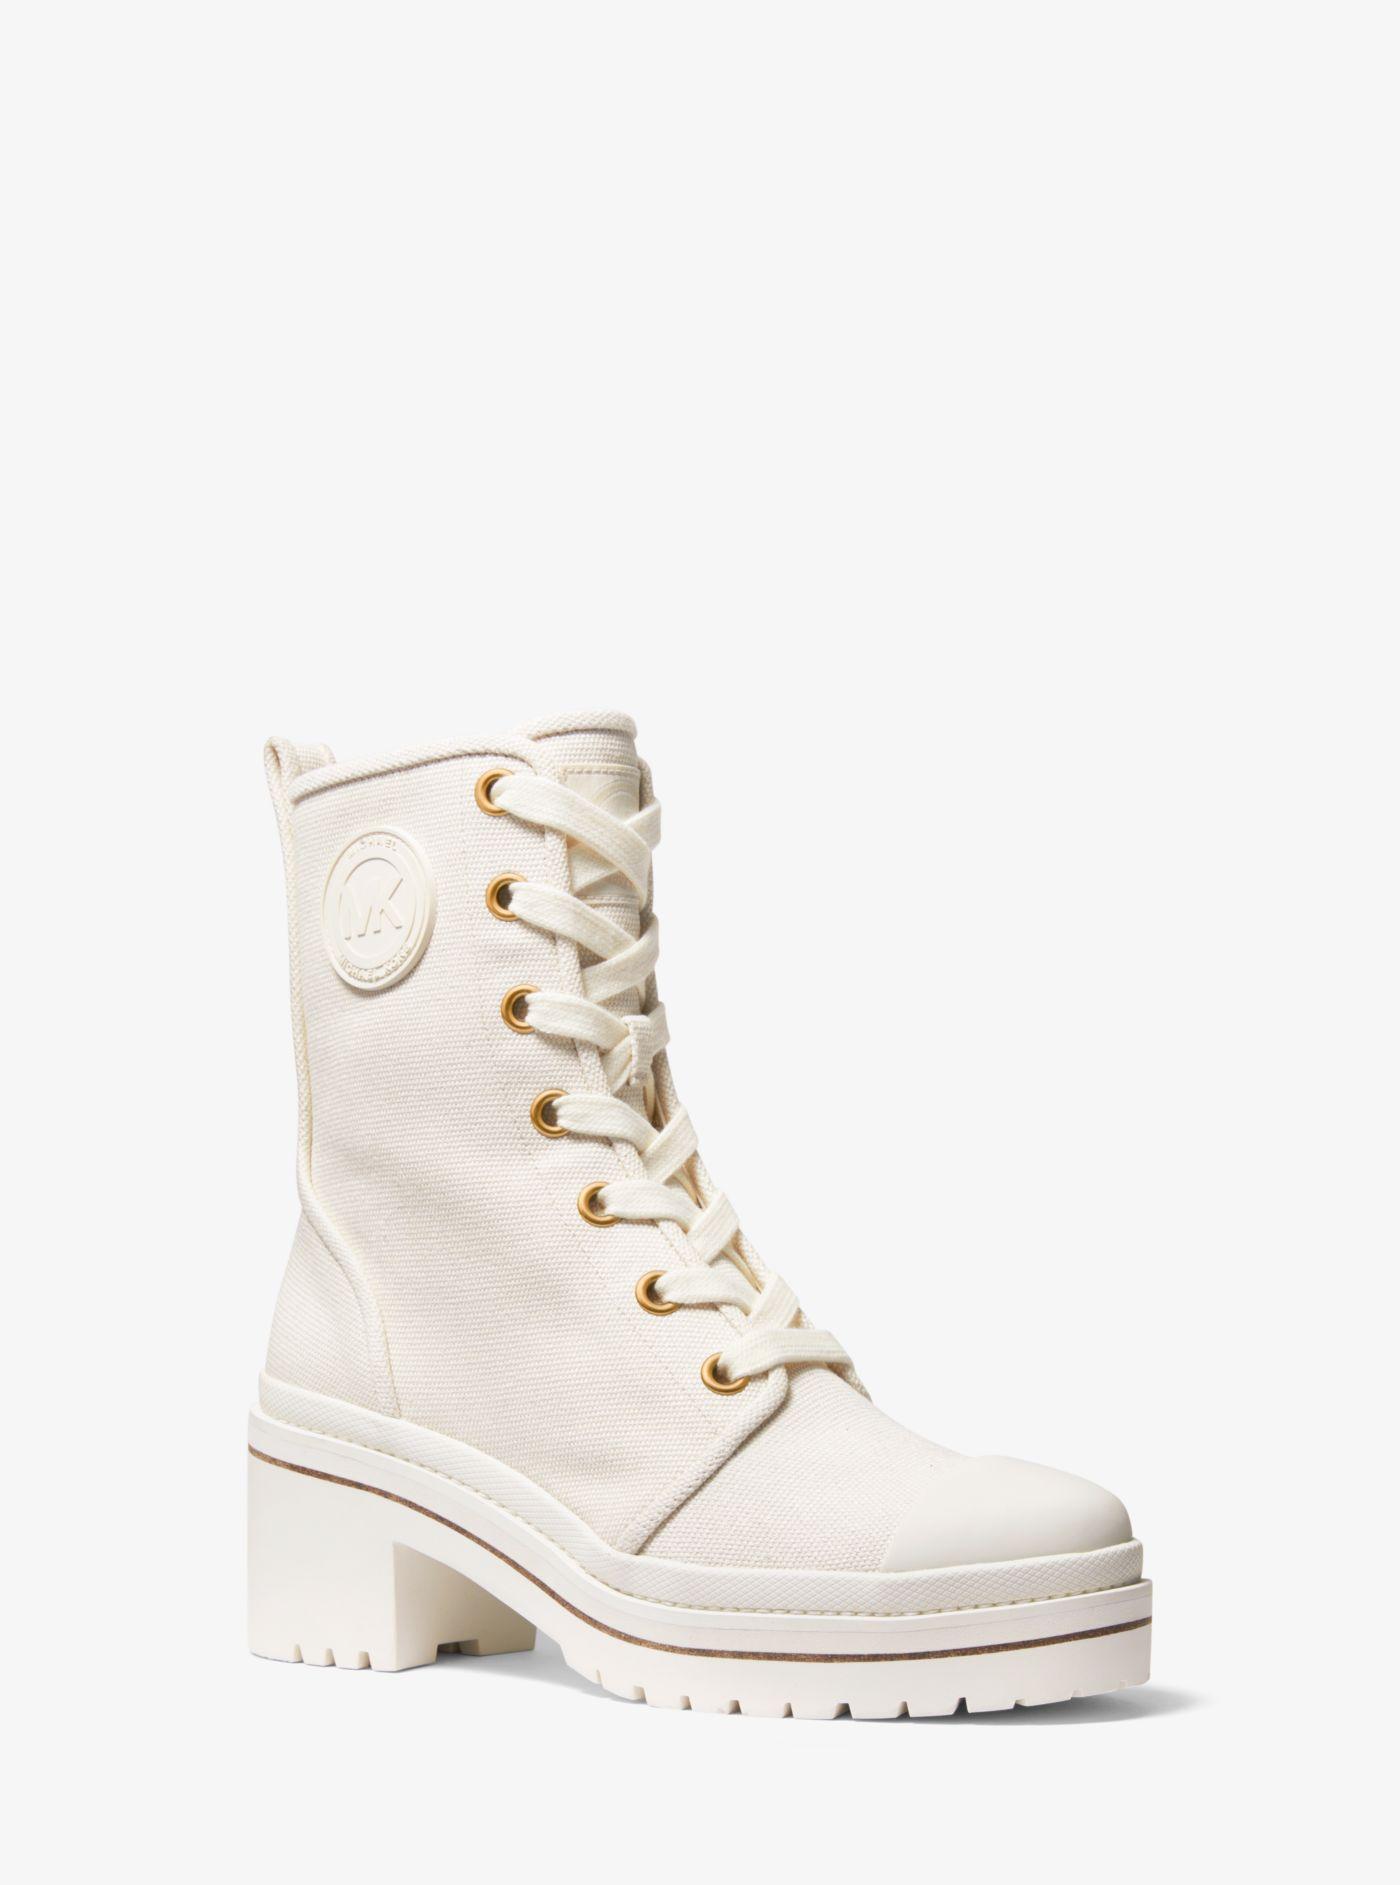 Michael Kors Corey Canvas Combat Boot in Cream (Natural) - Lyst